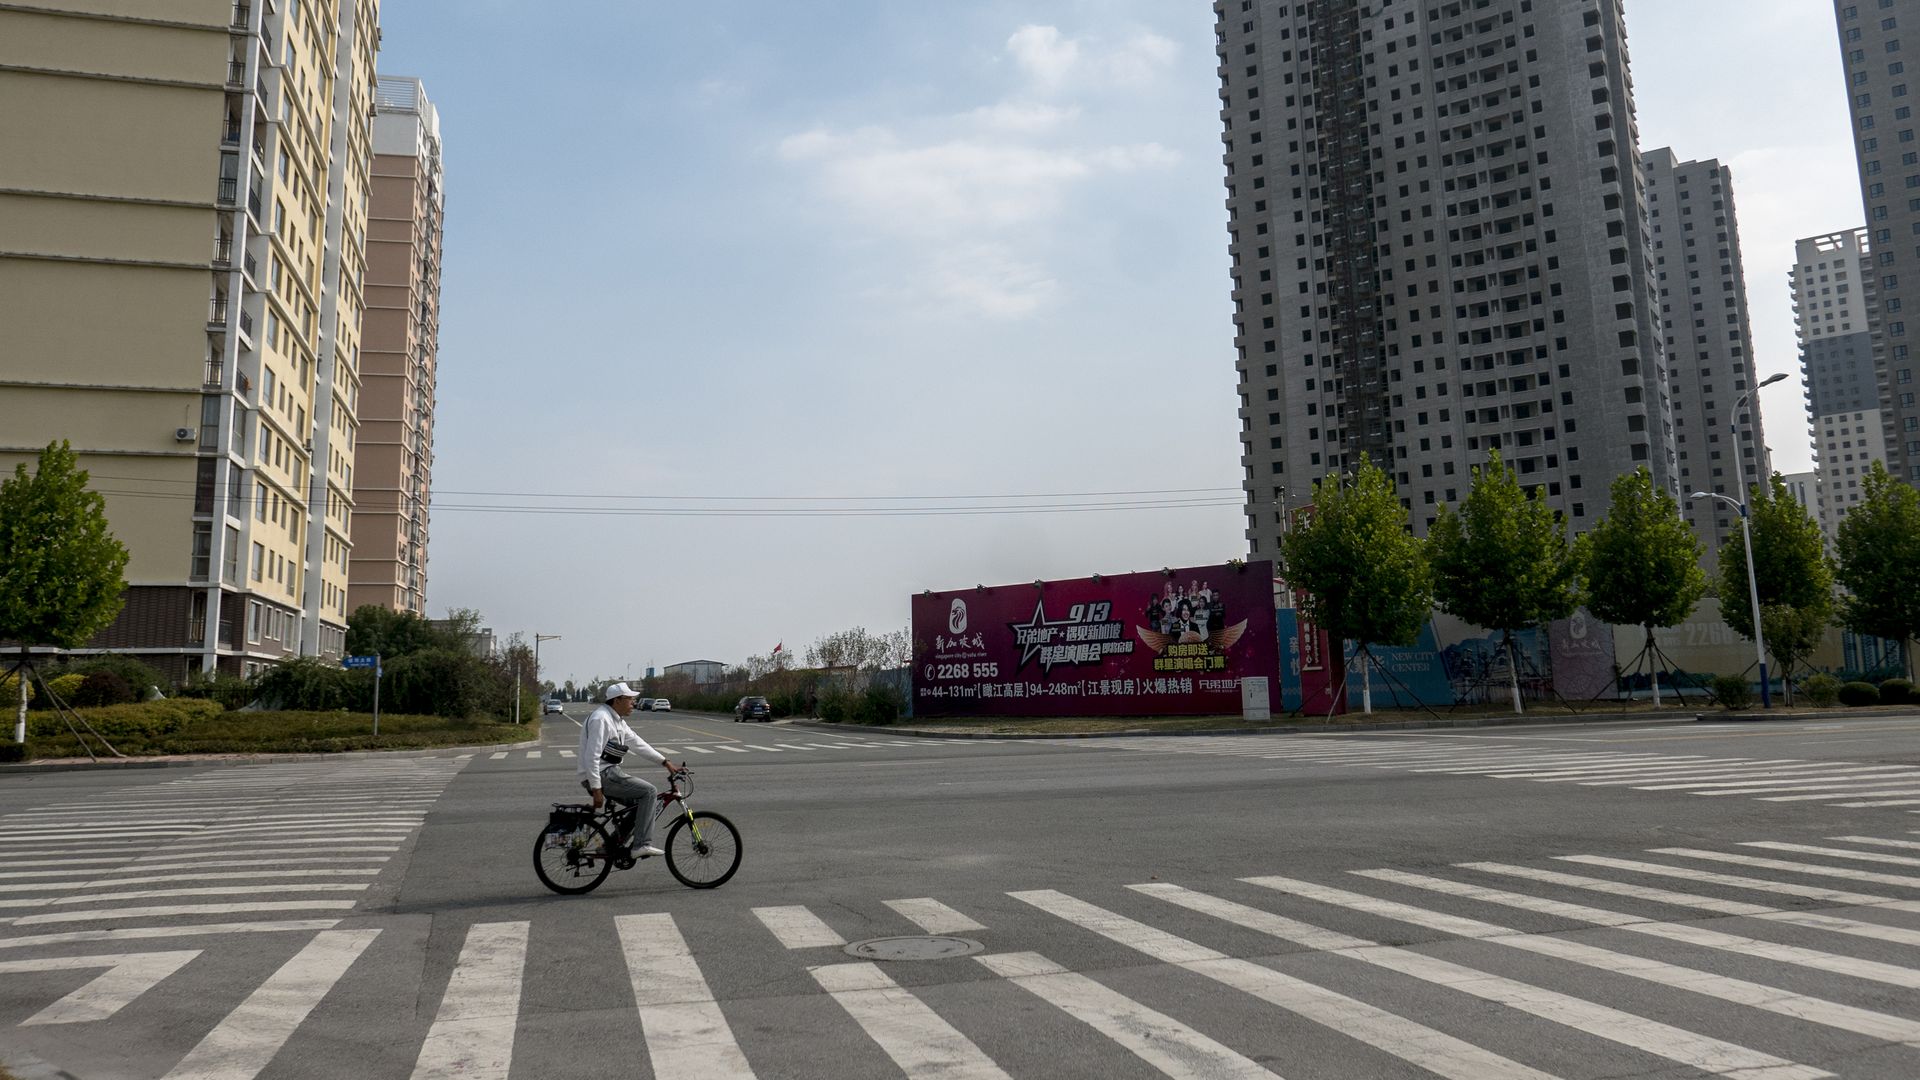 A man rides a bike through an empty city